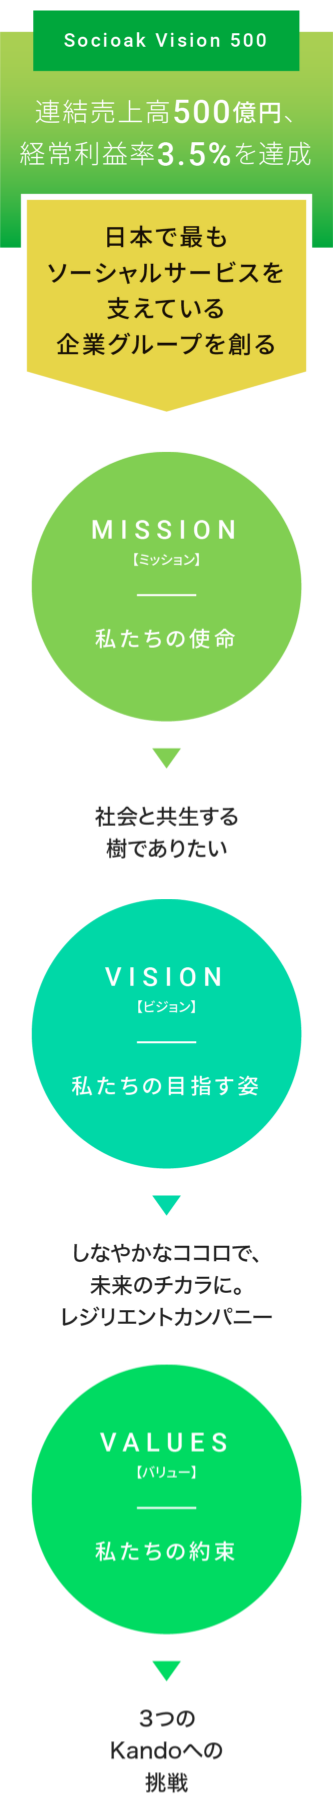 Socioak Vision 500